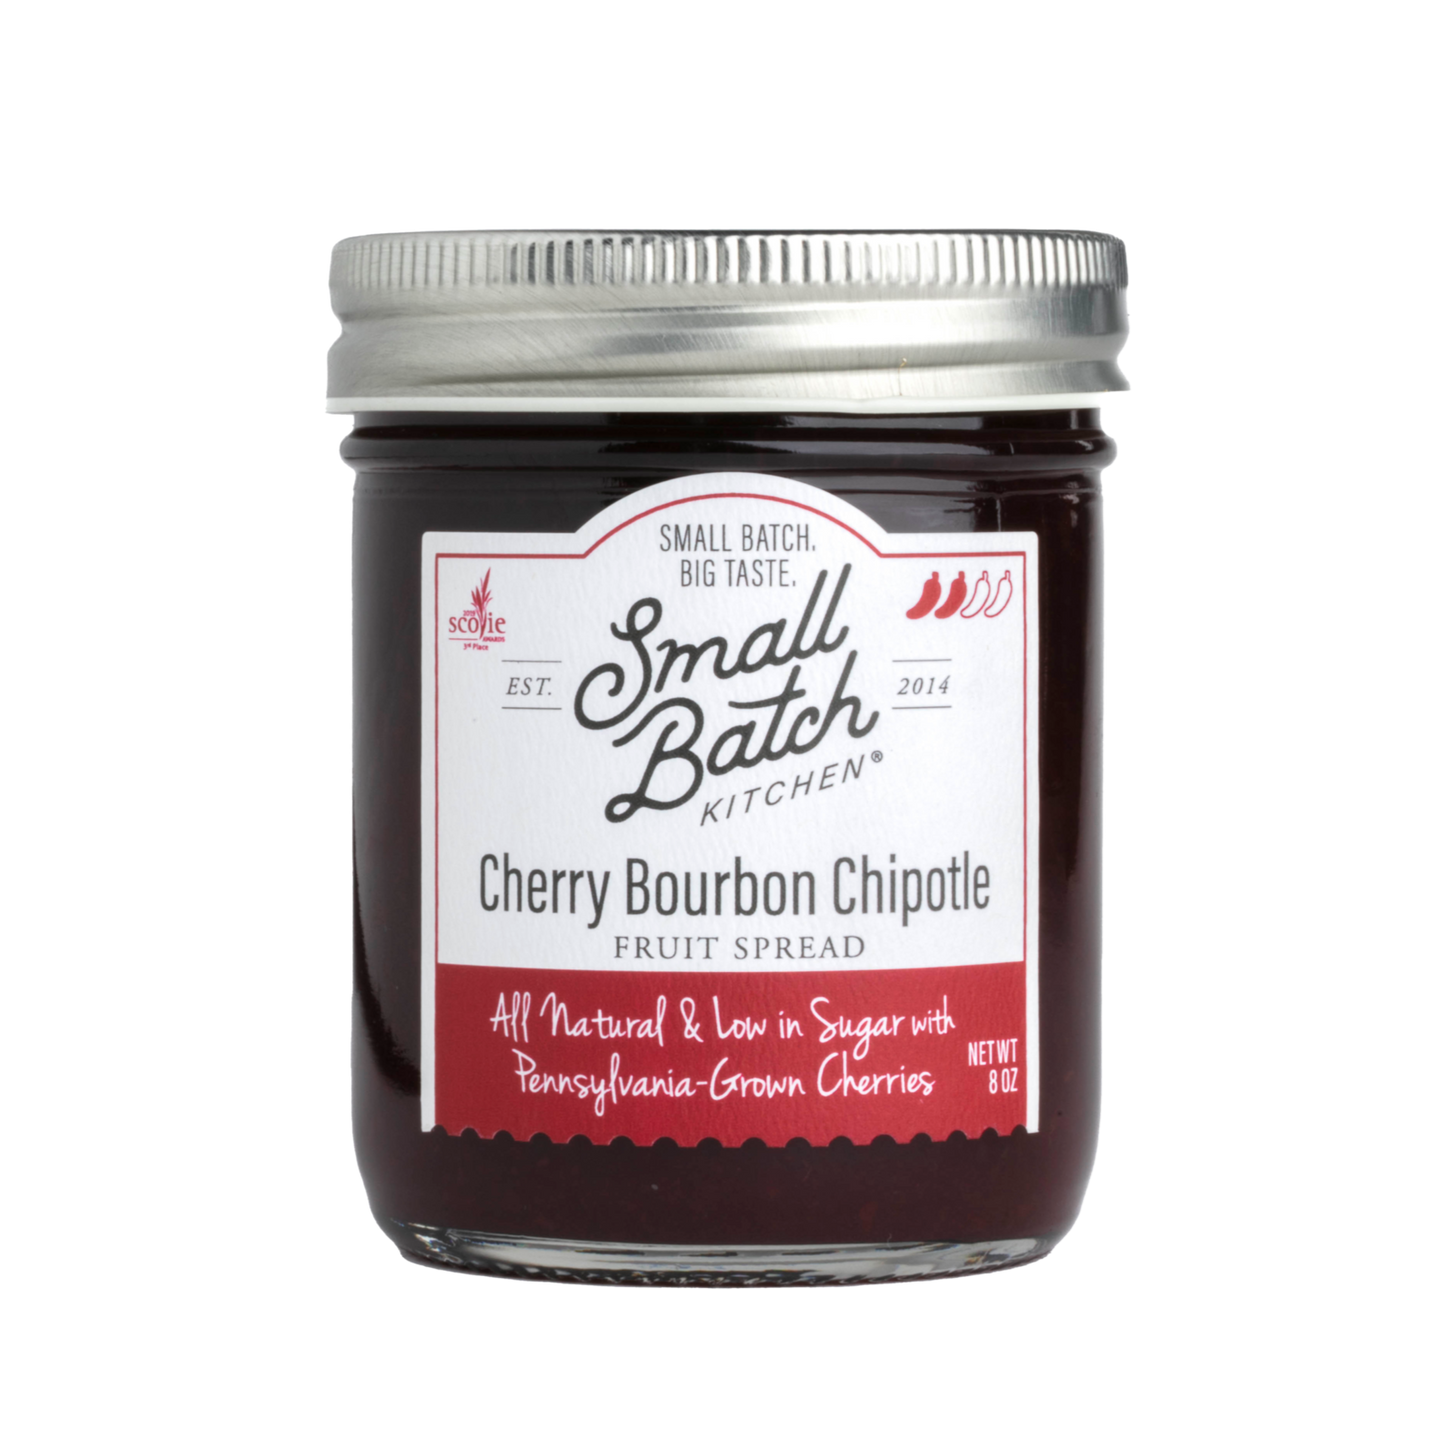 Cherry Bourbon Chipotle Fruit Spread